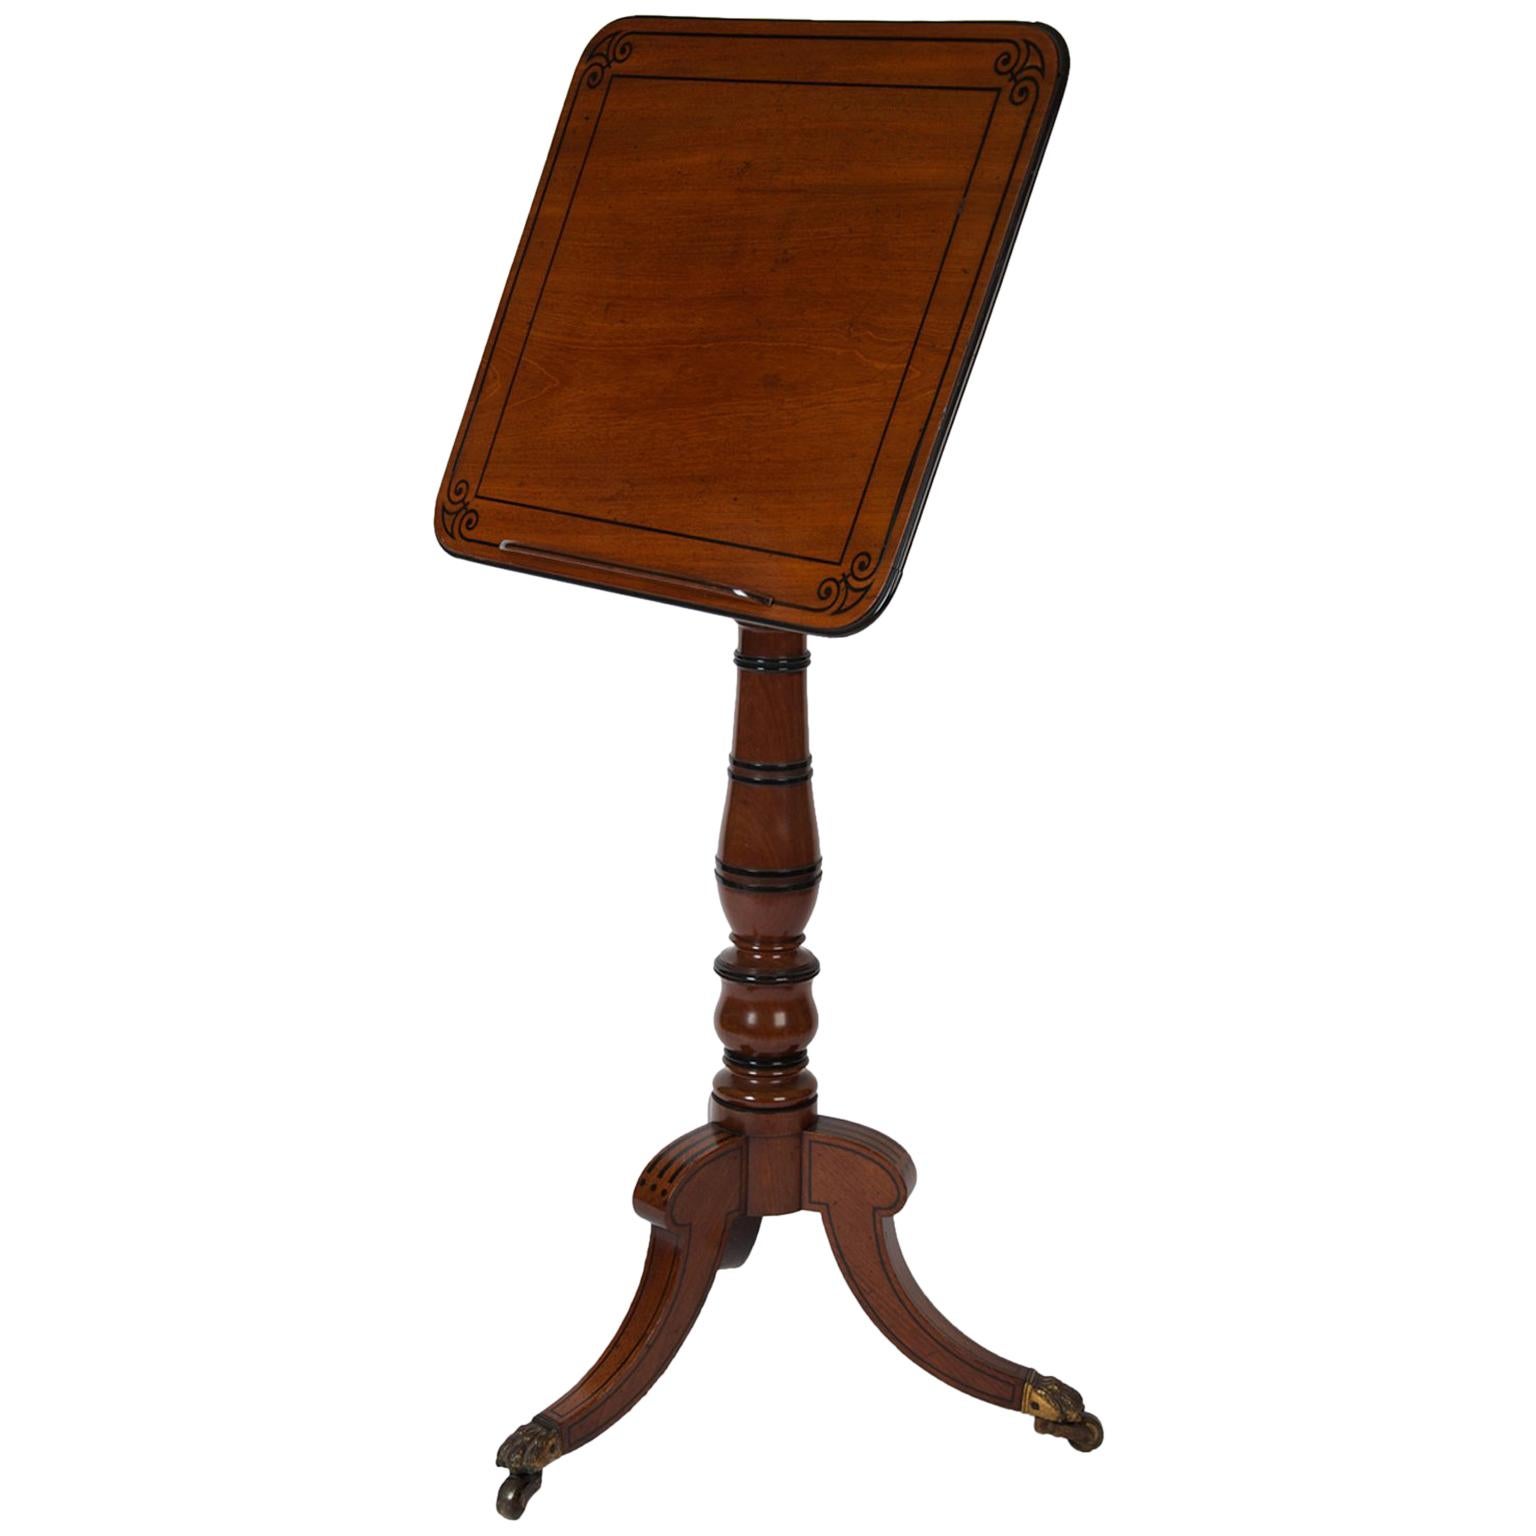 Rare English Regency Period Mahogany Adjustable Reading Table, circa 1820